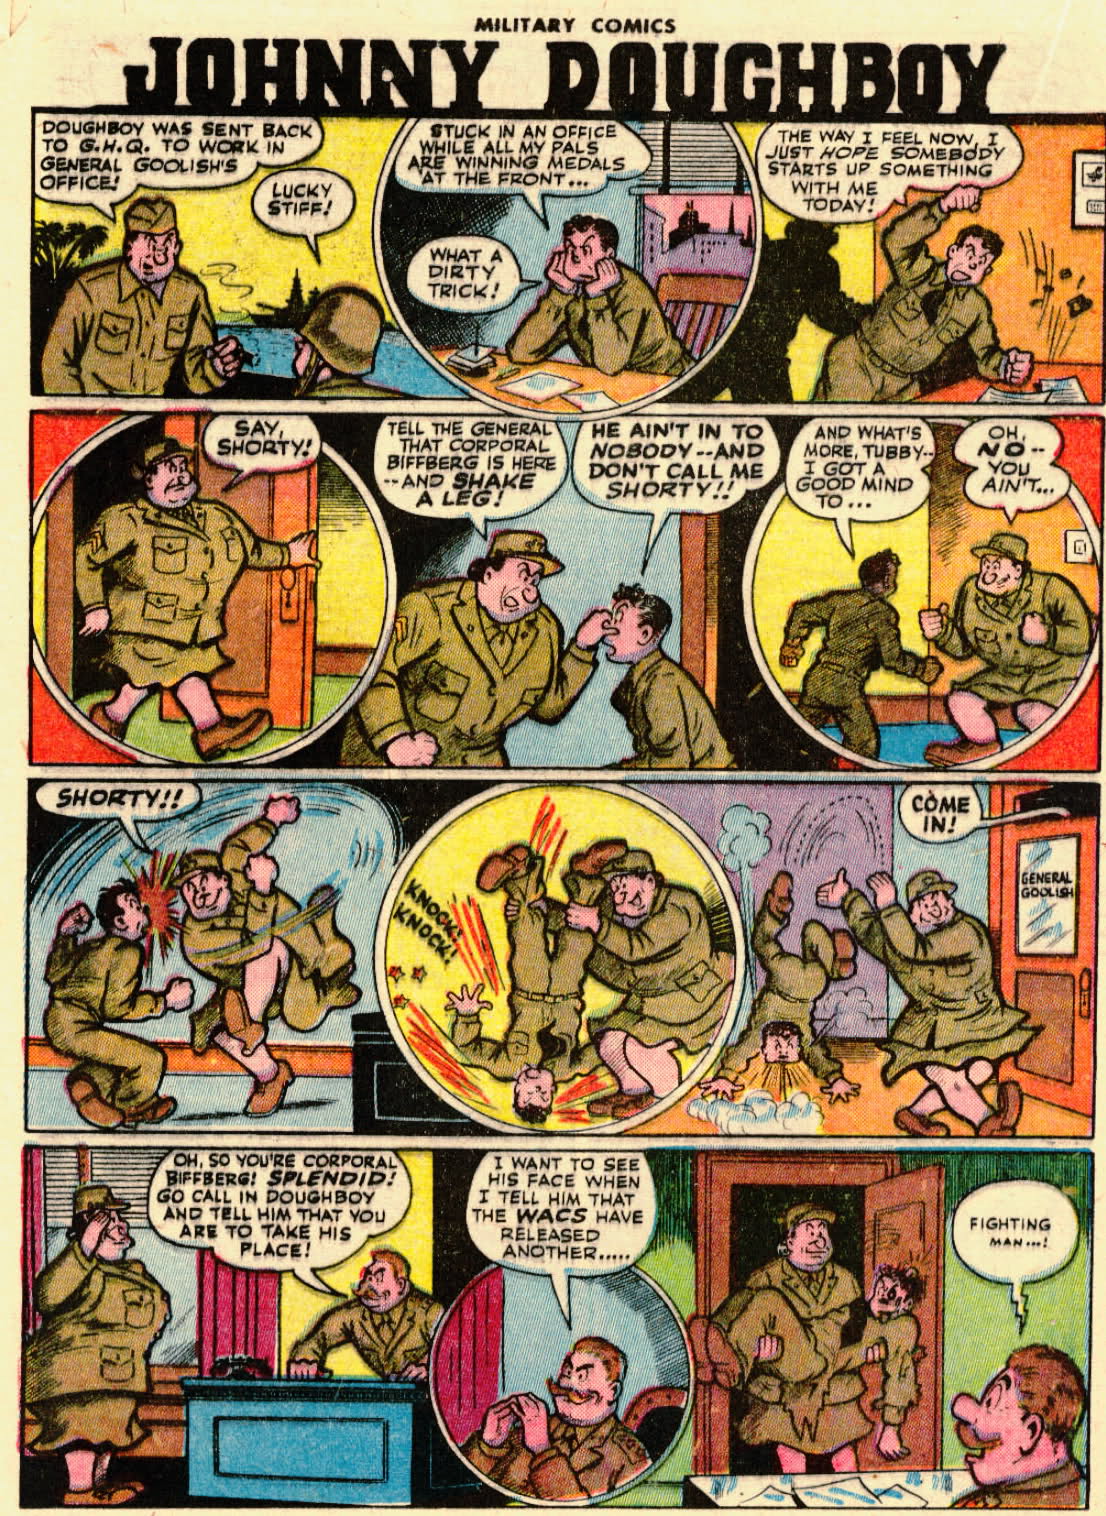 Military Comics #8